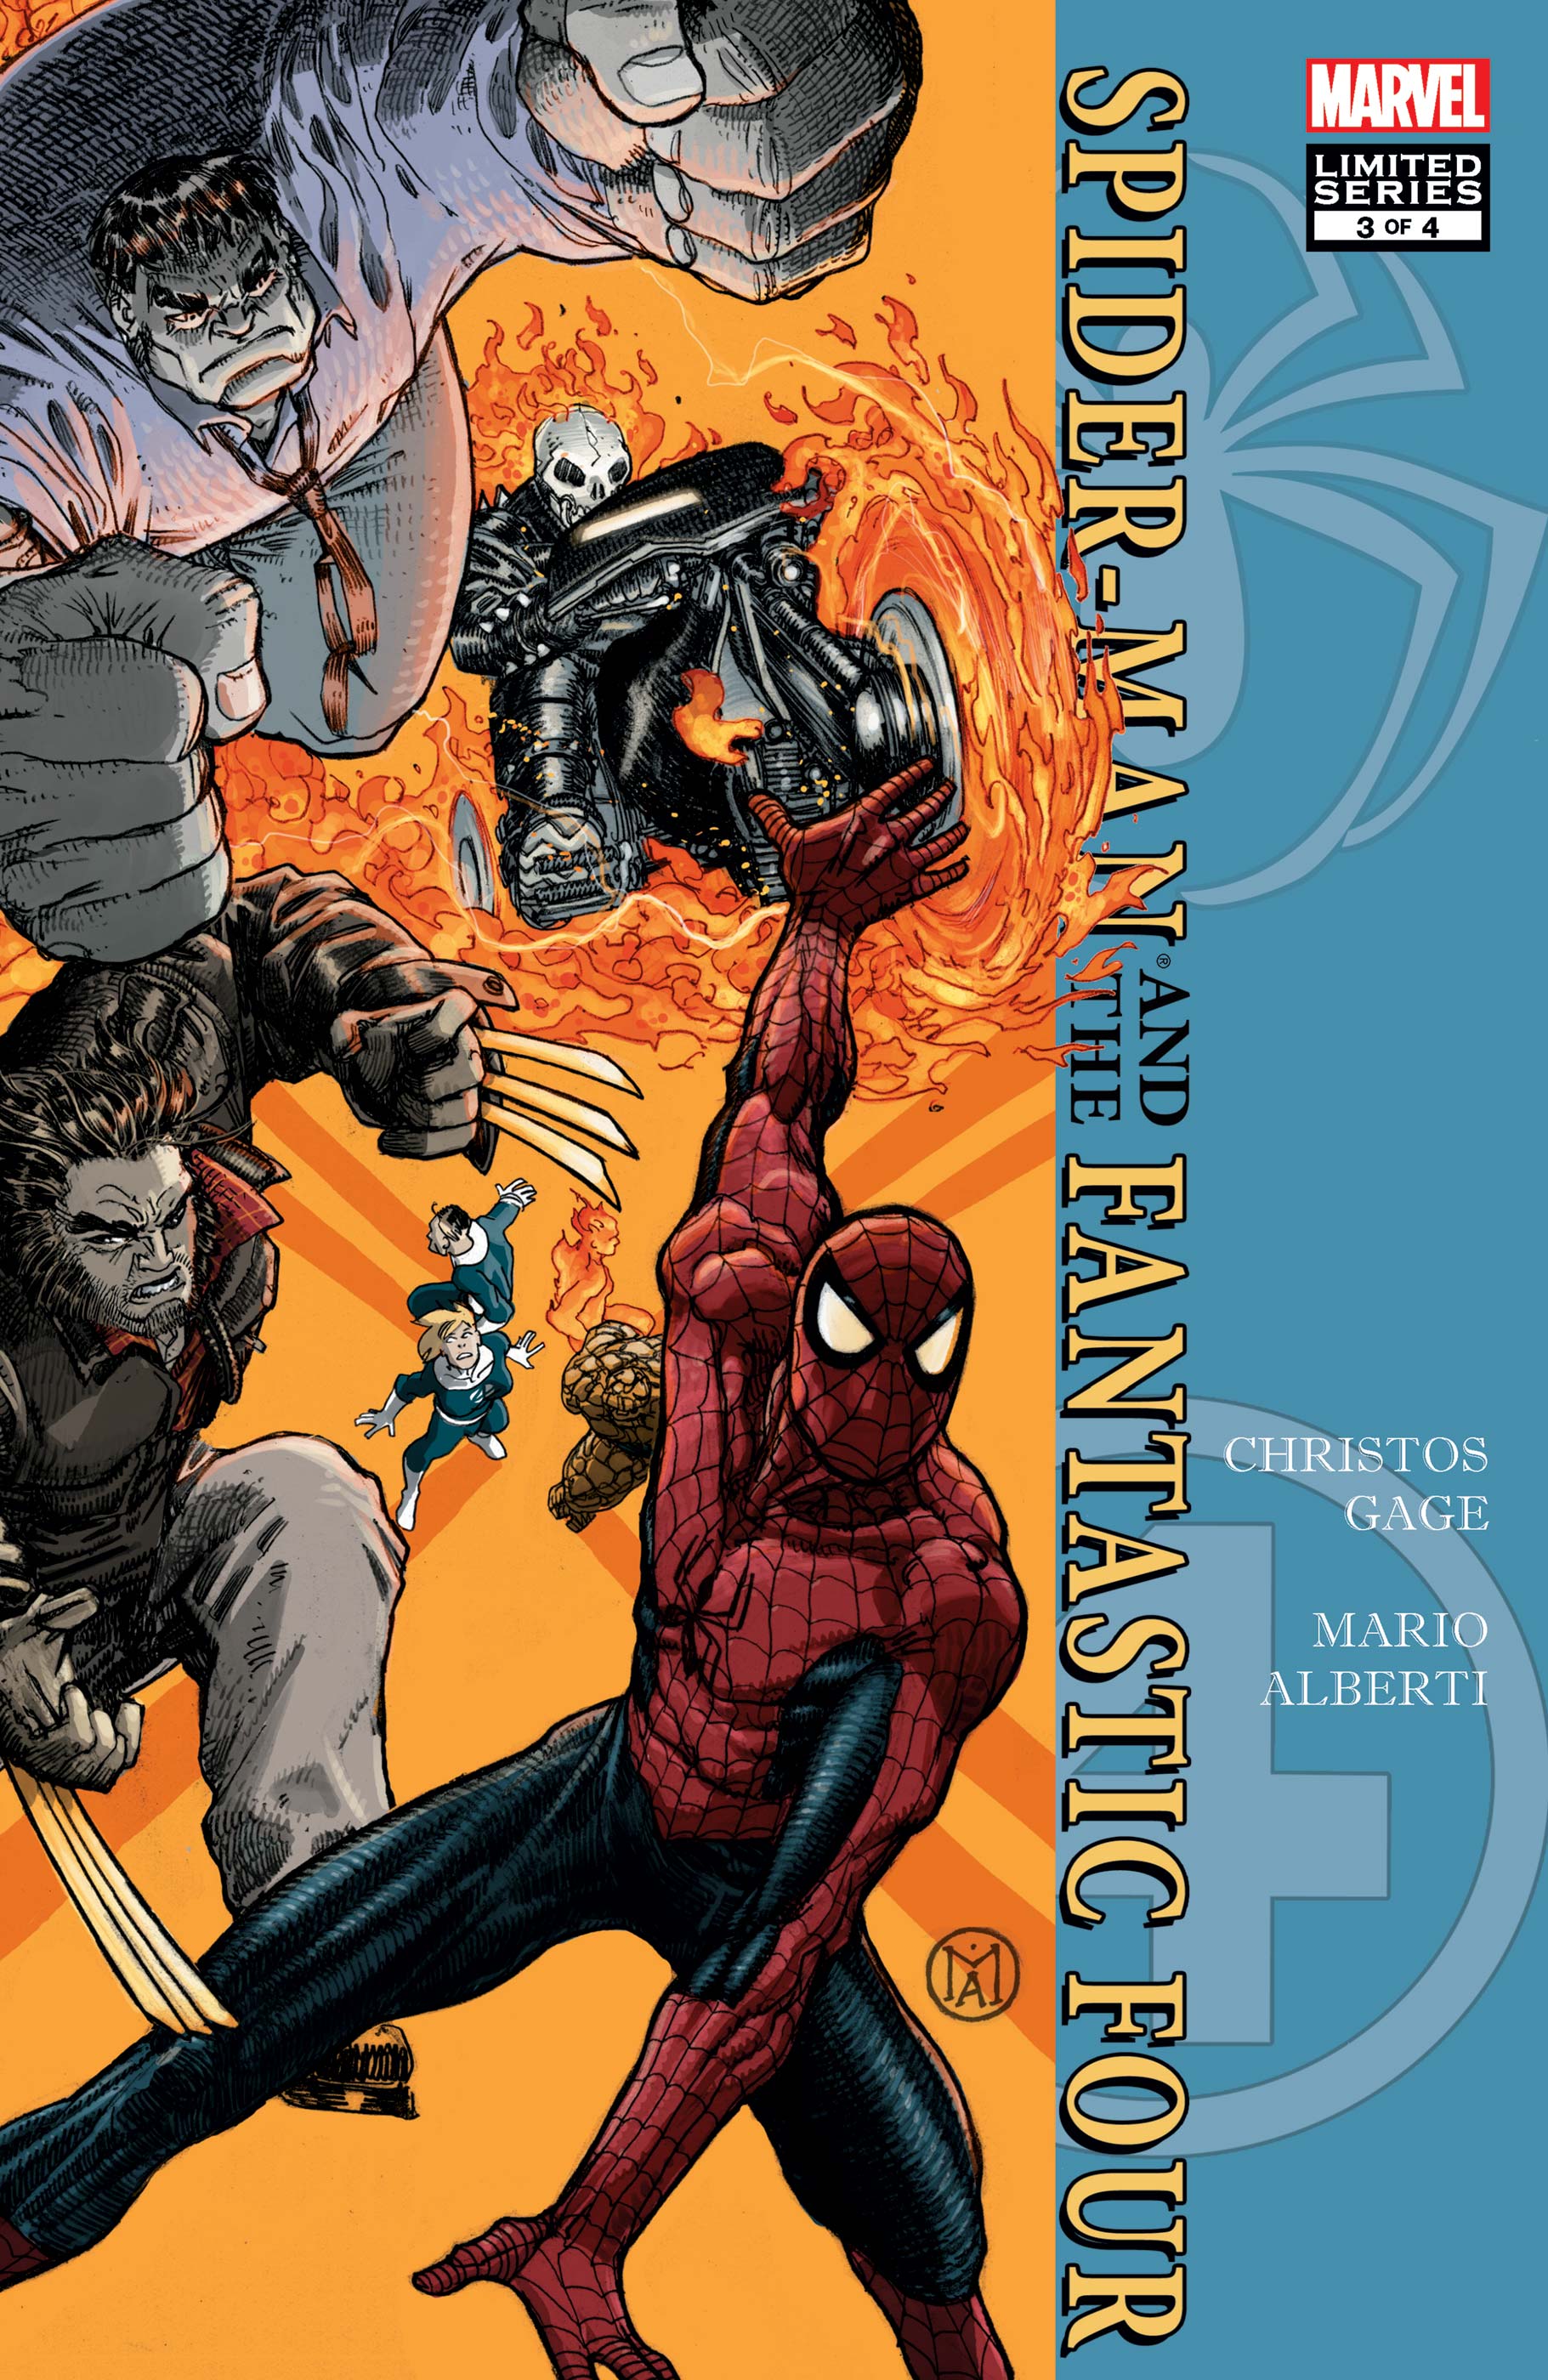 Spider-Man/Fantastic Four (2010) #3